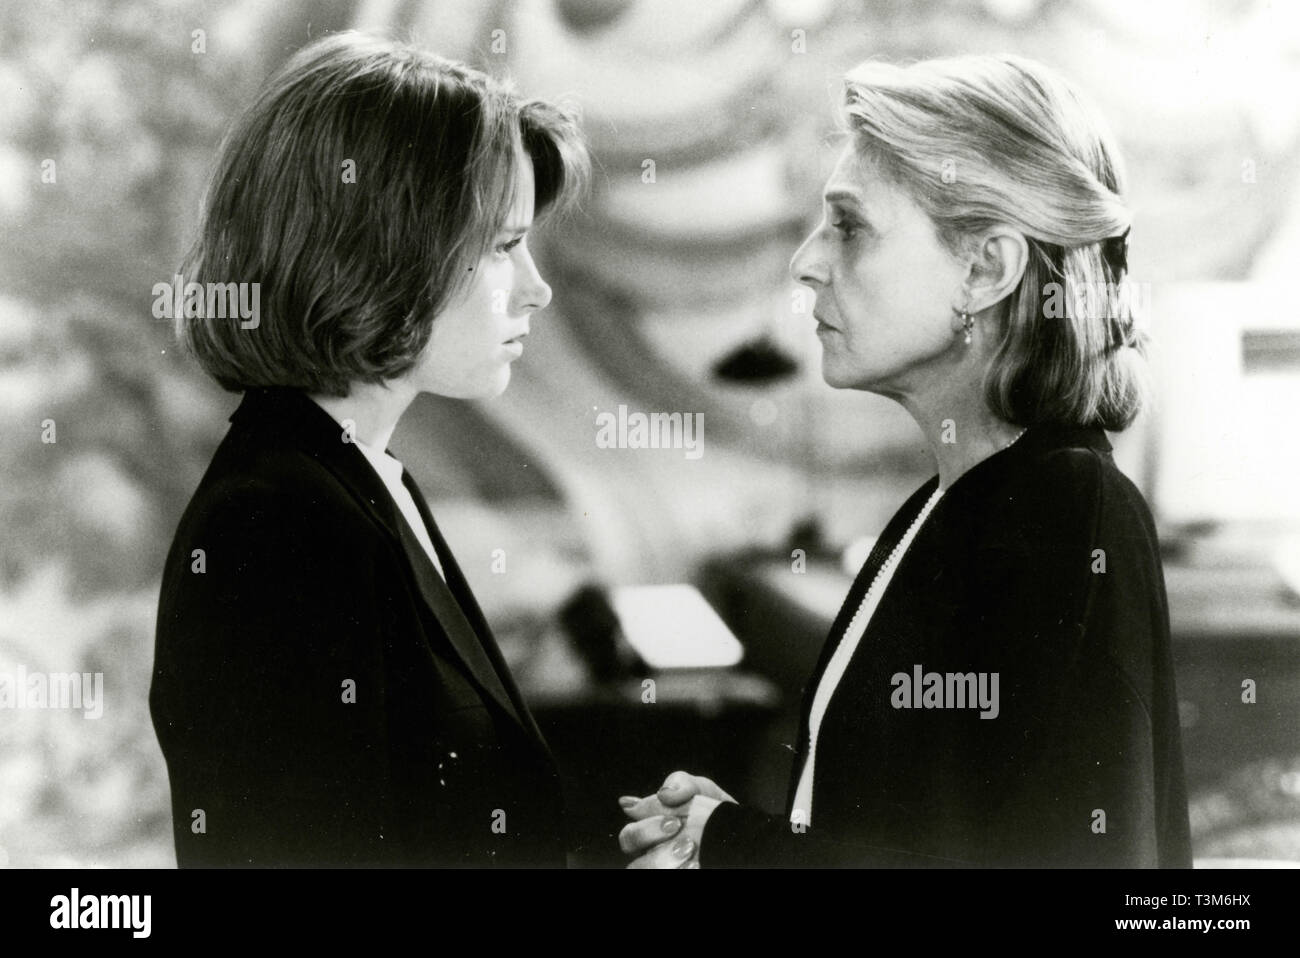 Bridget Fonda and Anne Bancroft in the movie Point of No Return, 1993 Stock Photo